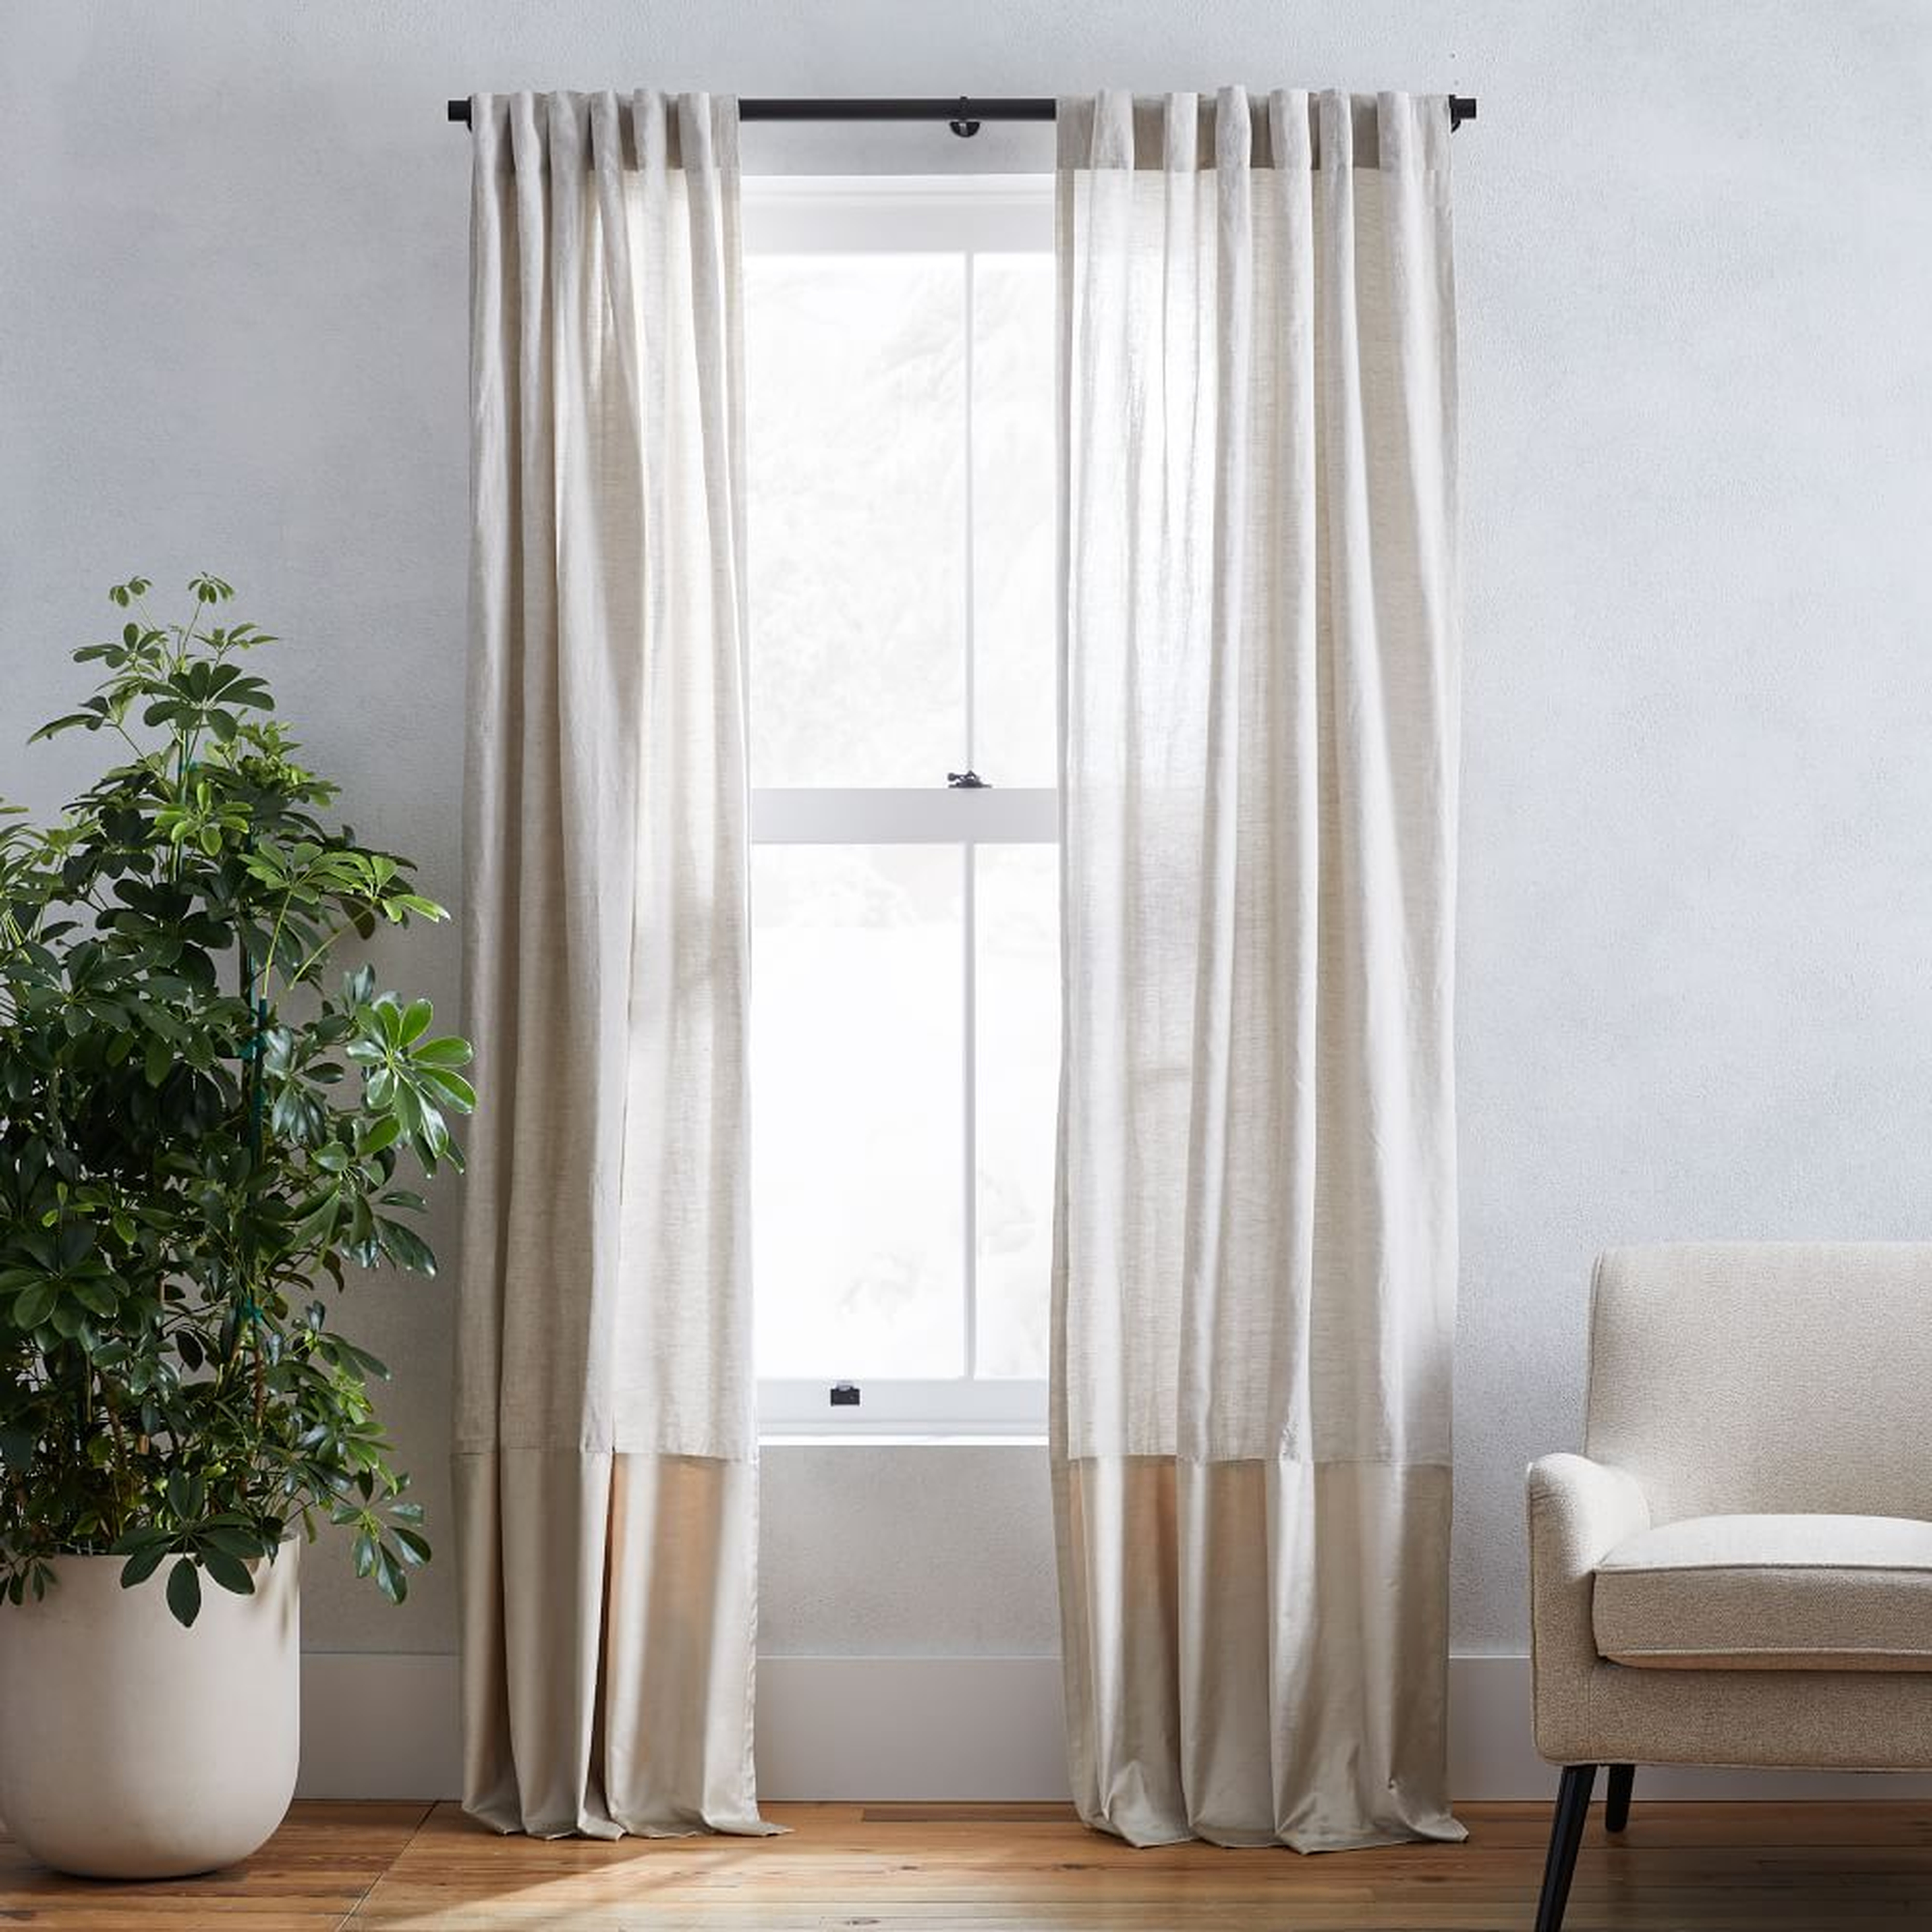 European Flax Linen + Luster Velvet Curtain, Natural/Sand 48"x108" - West Elm